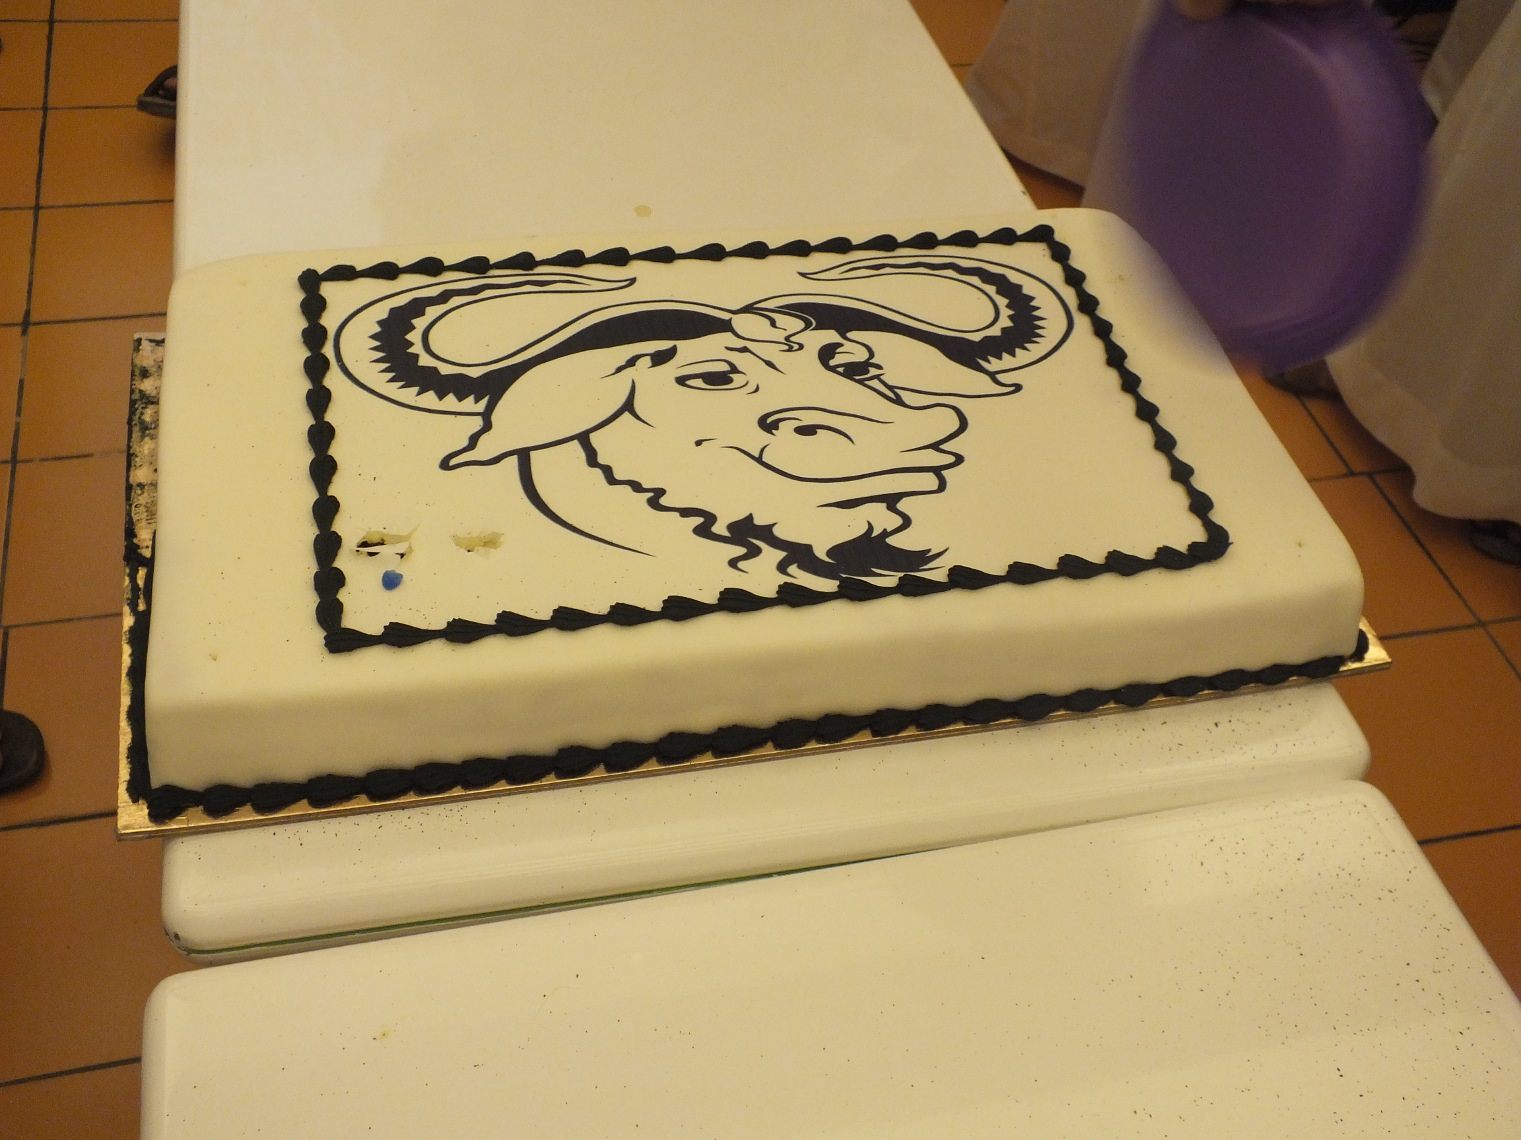 Saudia Arabia GNU cake